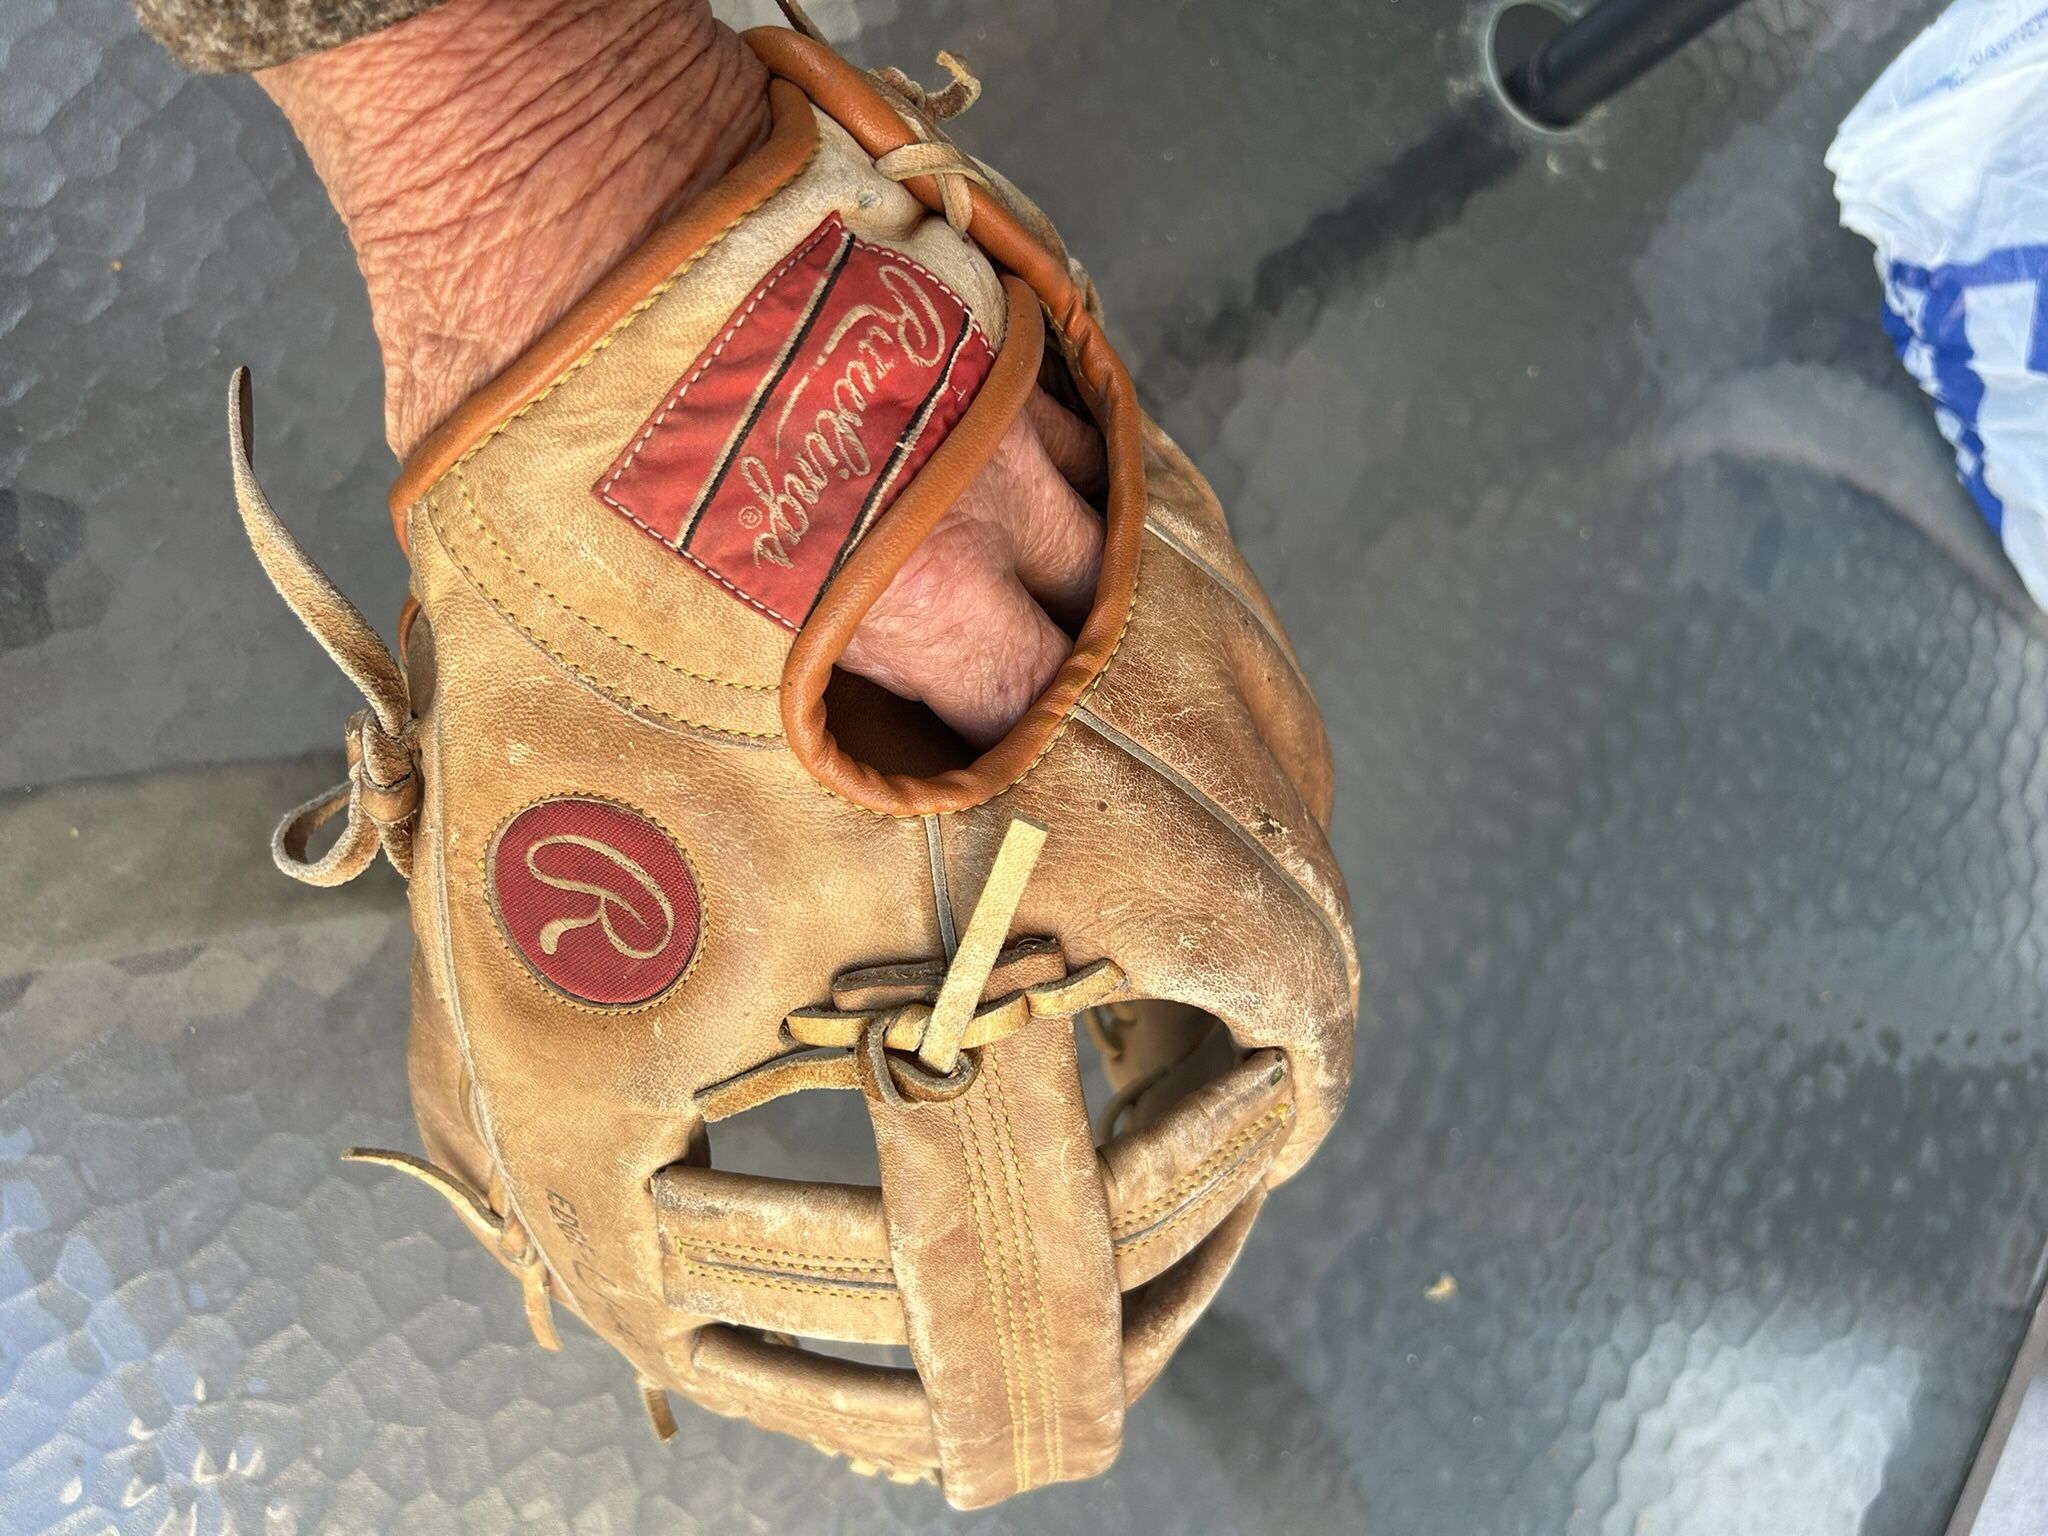 Rawlings Softball Glove PG6